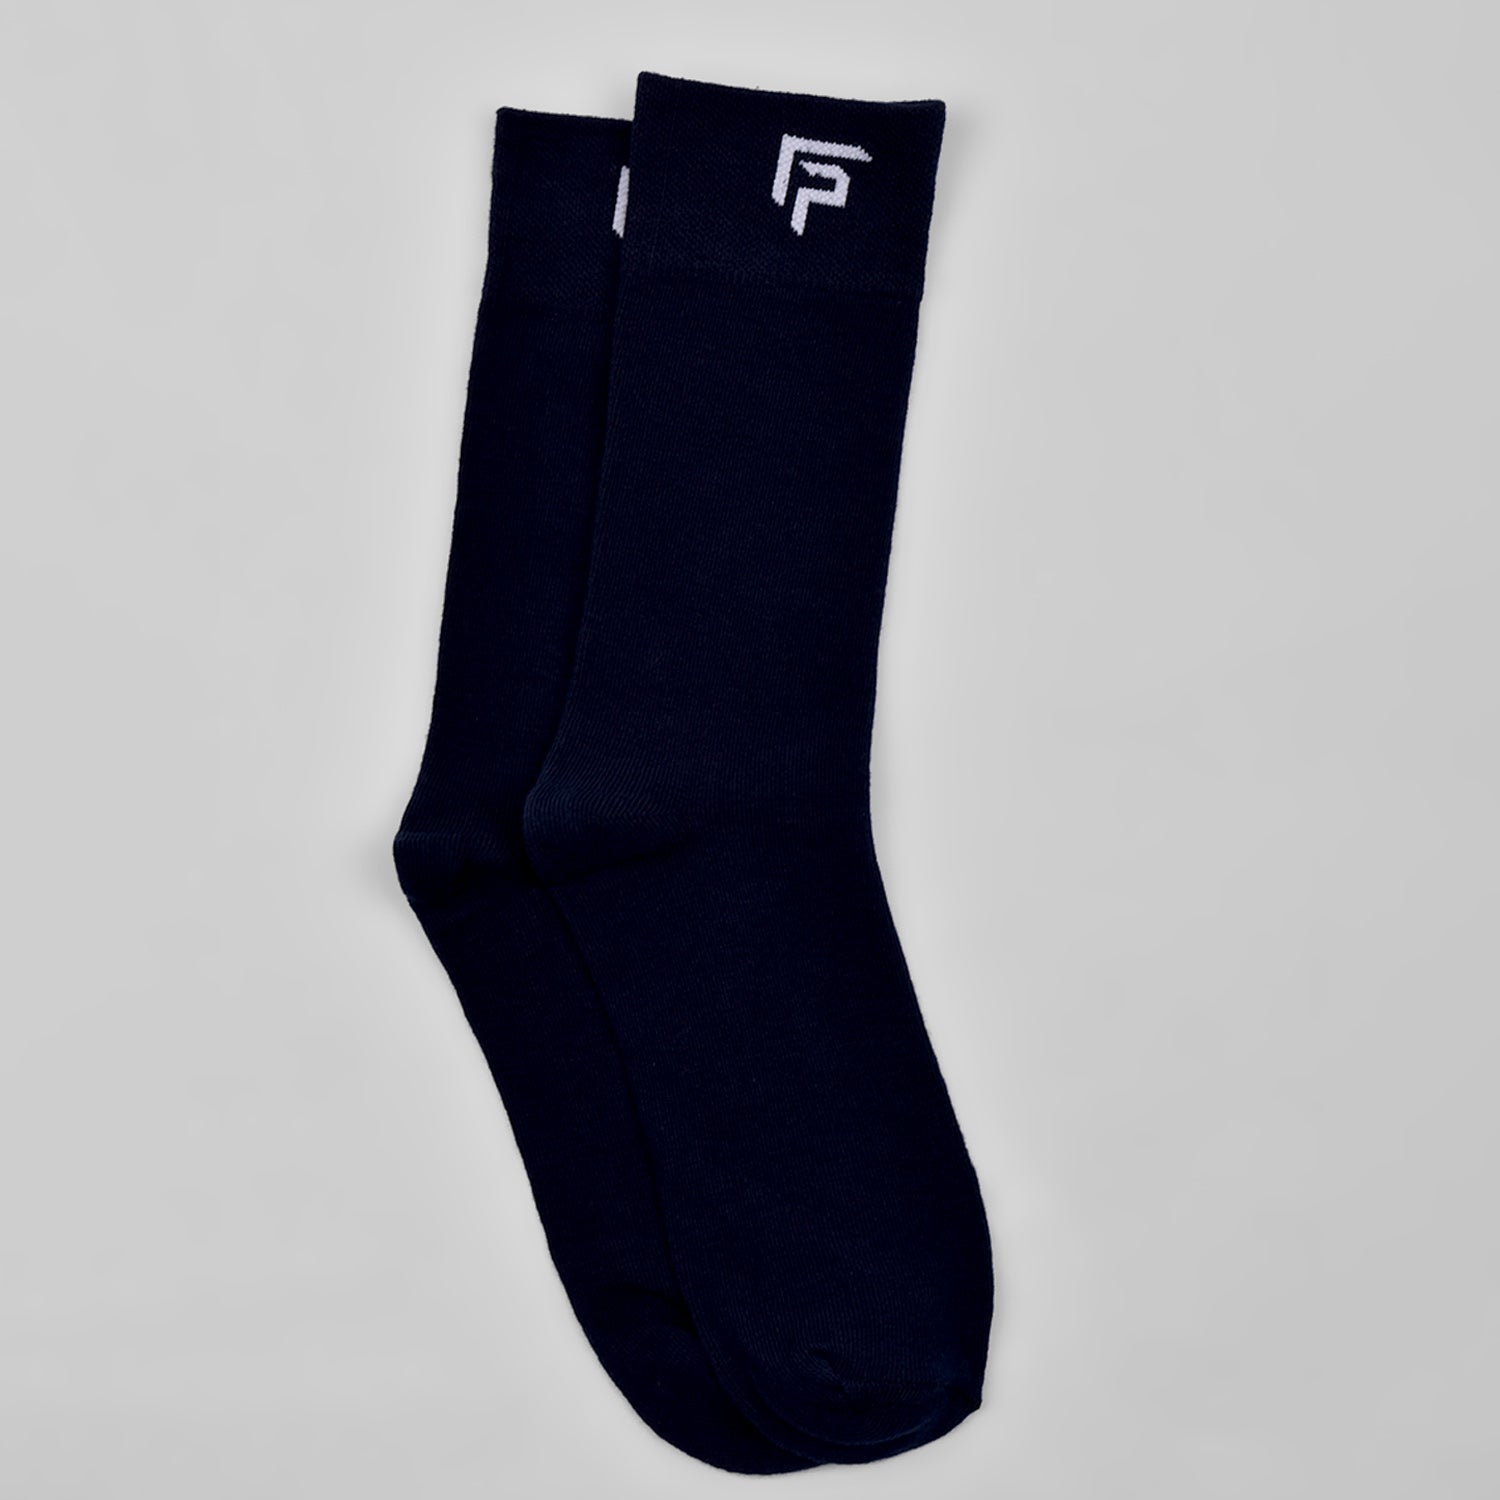 Footprints Men's Formal Organic Cotton & Bamboo Odour free Socks Navy Pack Of 5